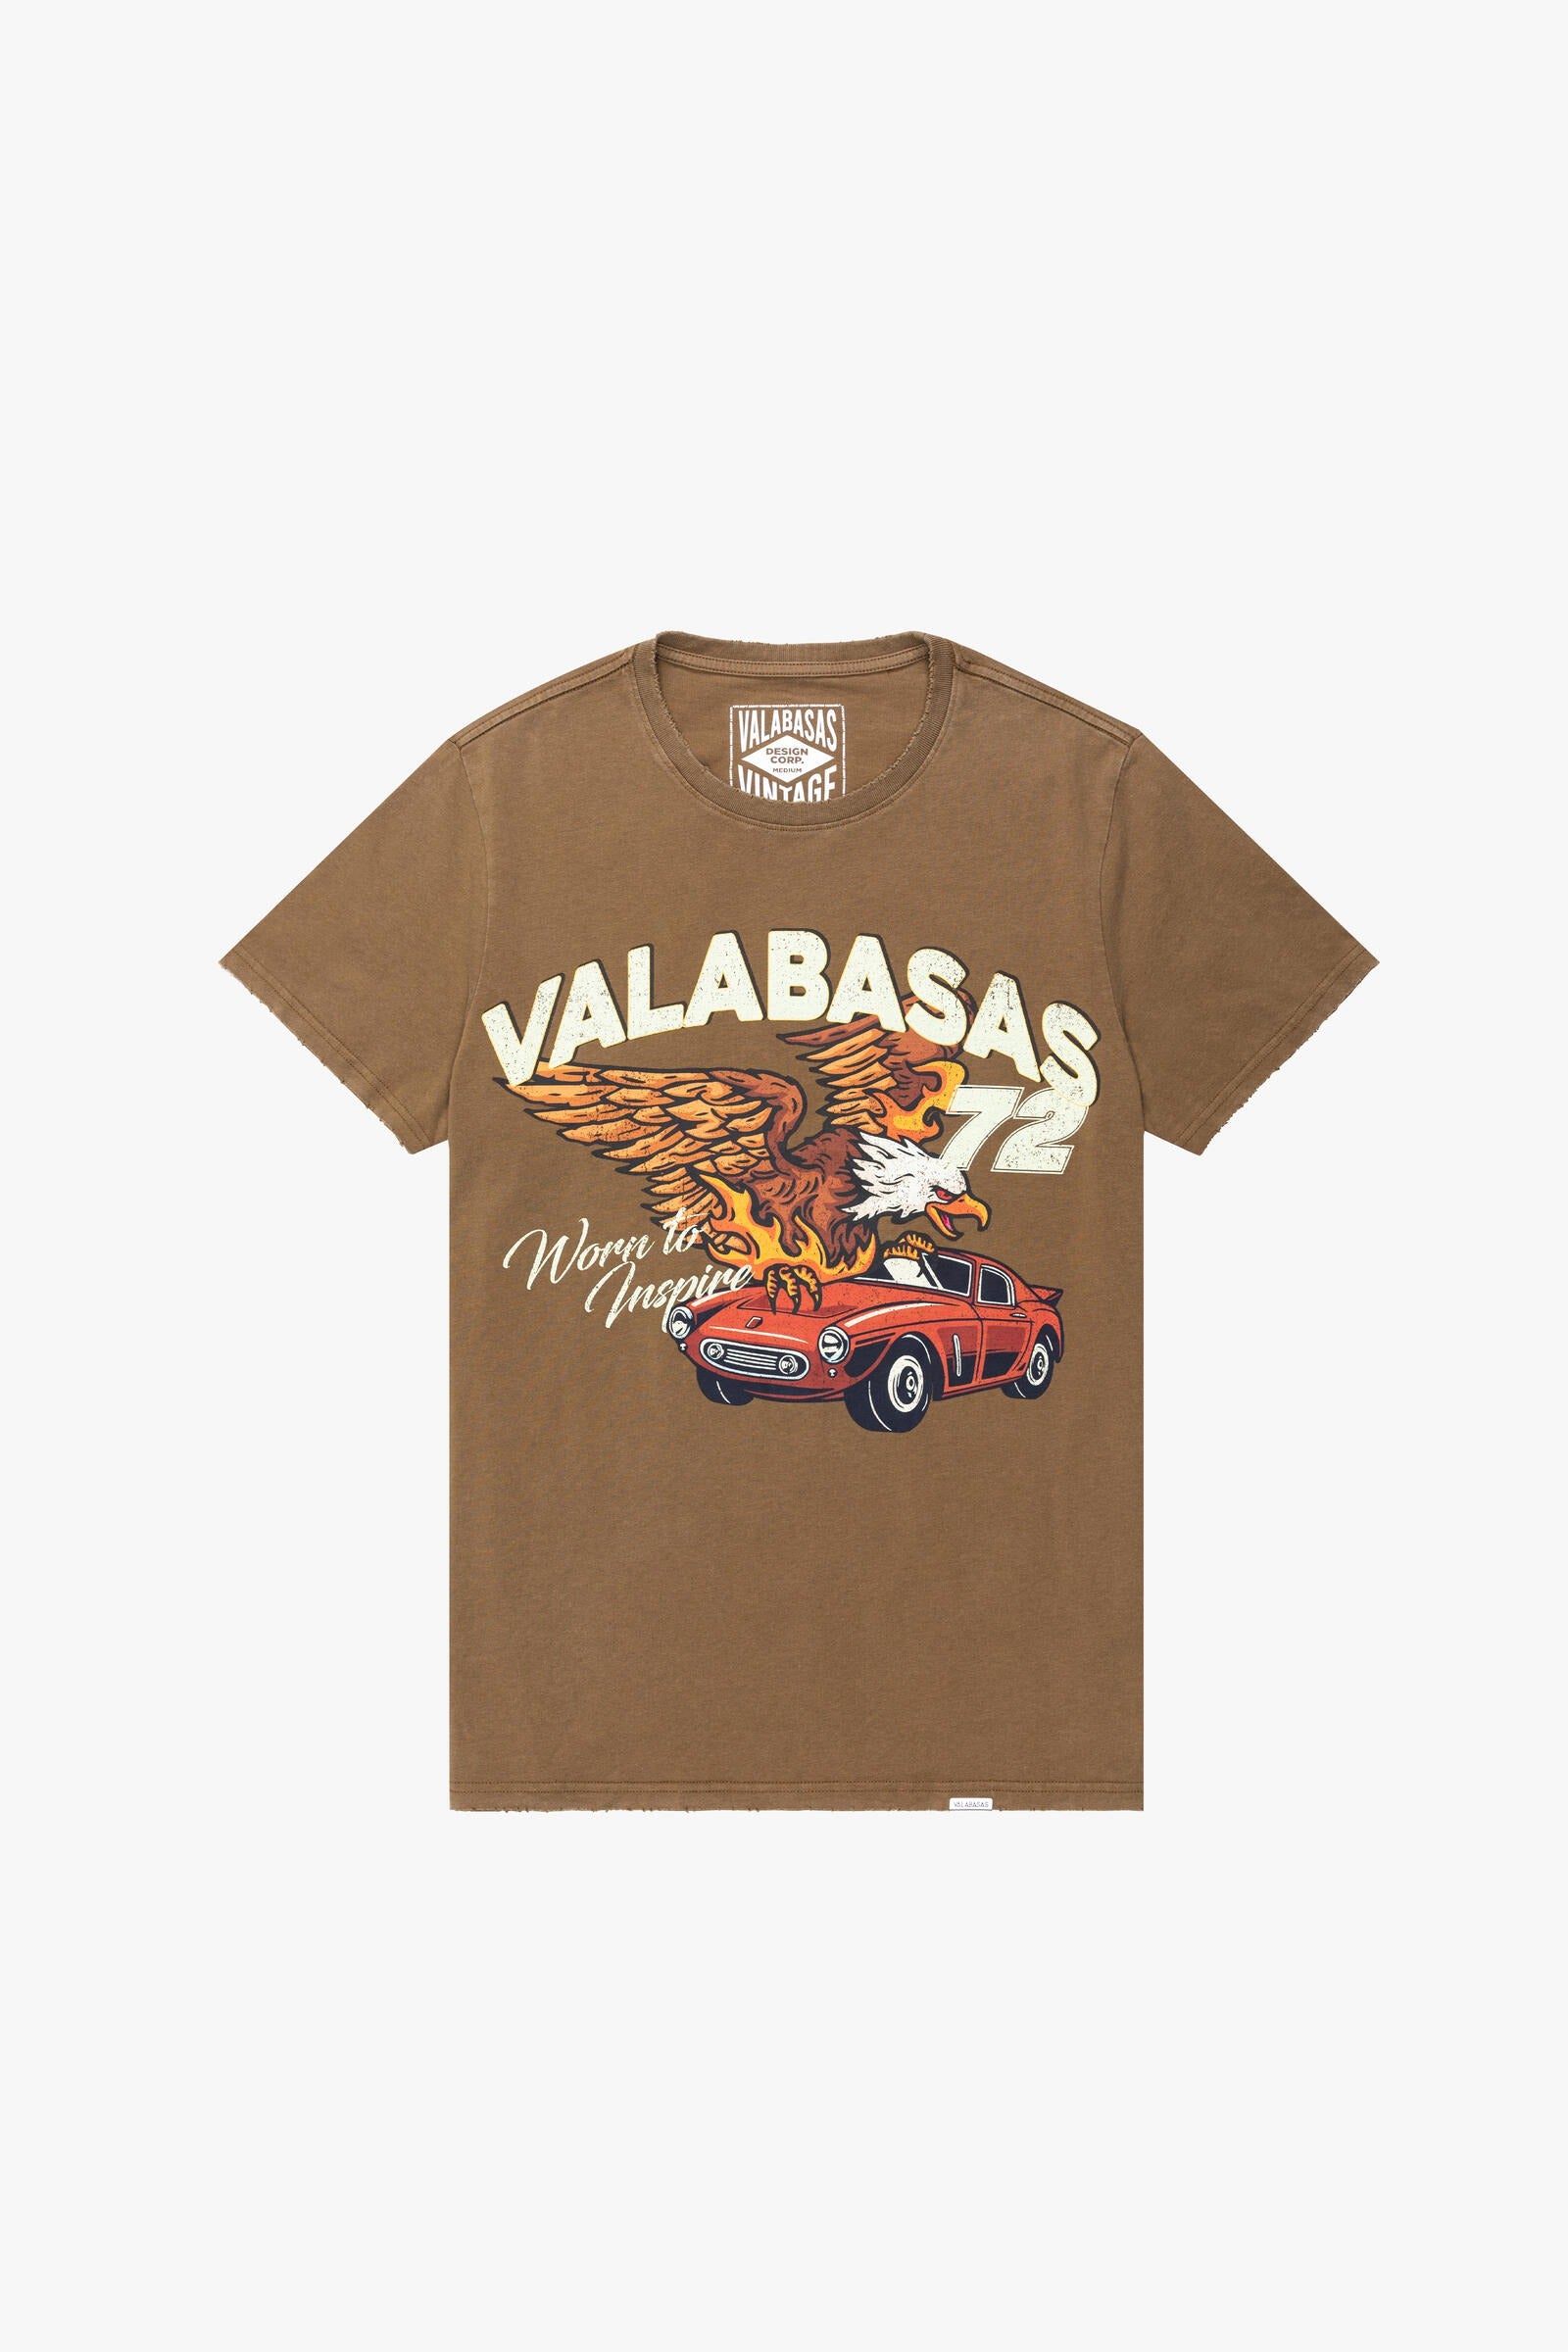 Valabasas Men's Tee Shirt - Firebird